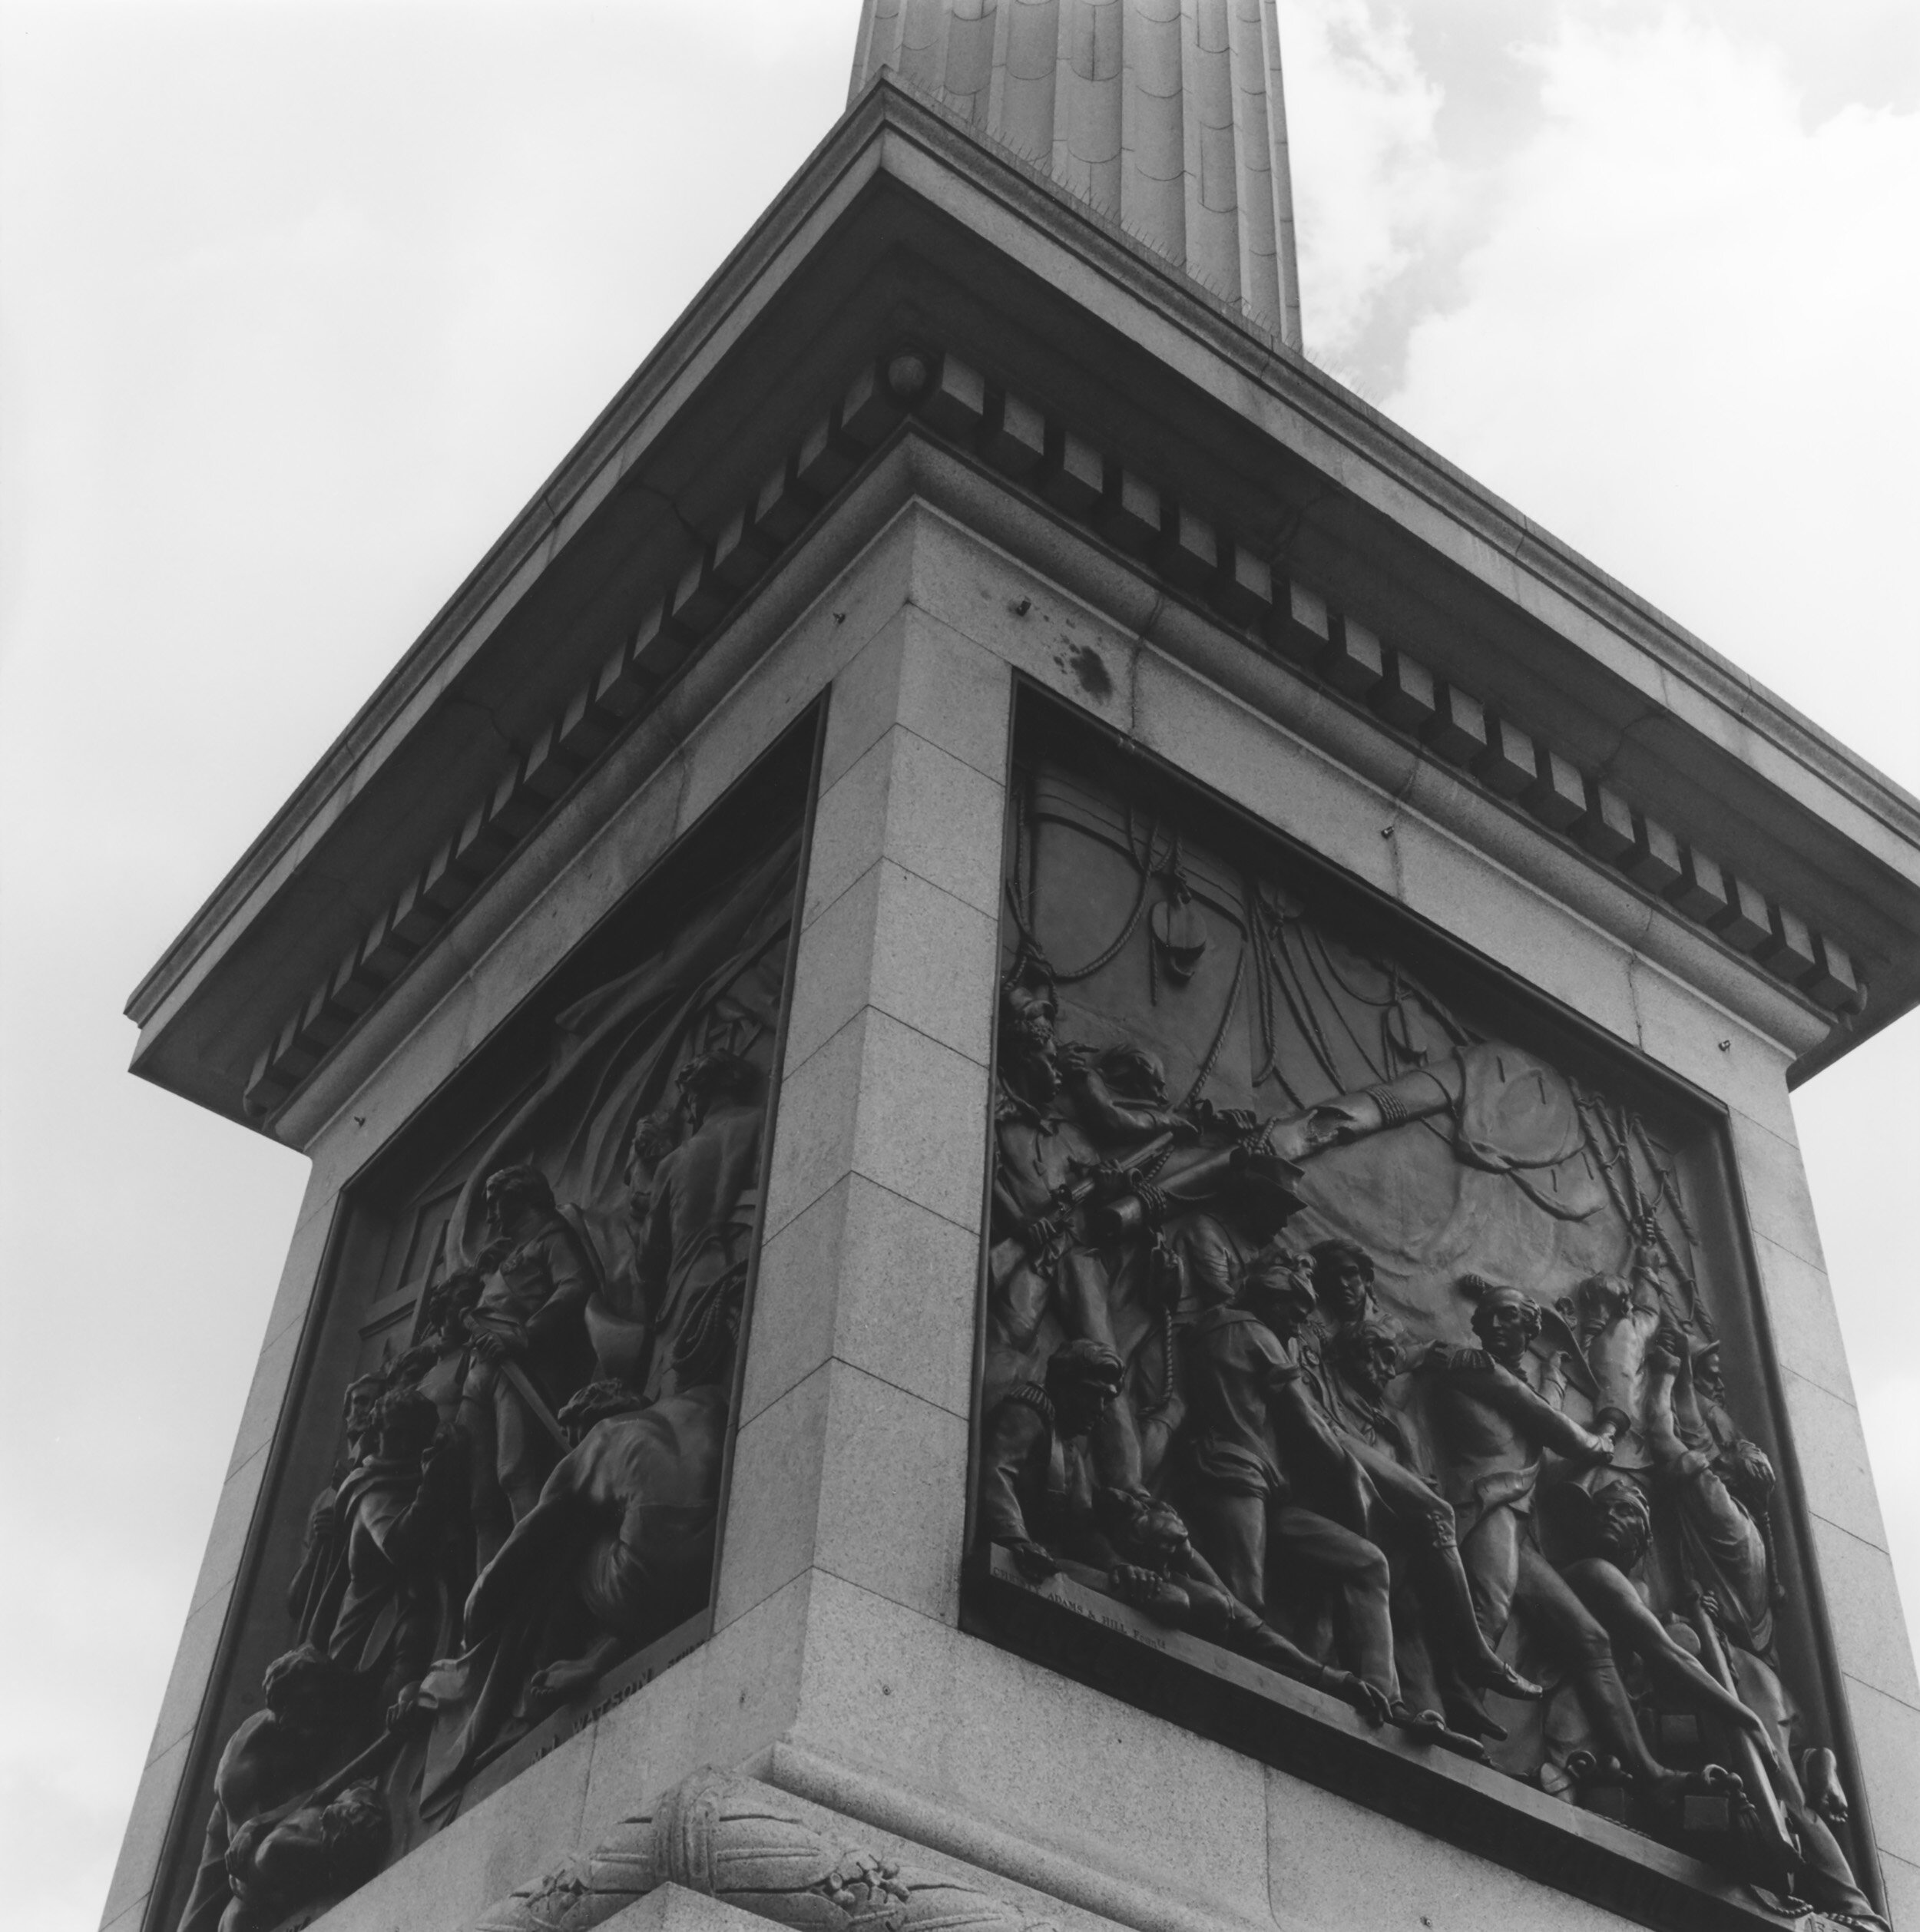 Lord Nelson’s Column, Trafalgar Square, London, UK, 2017